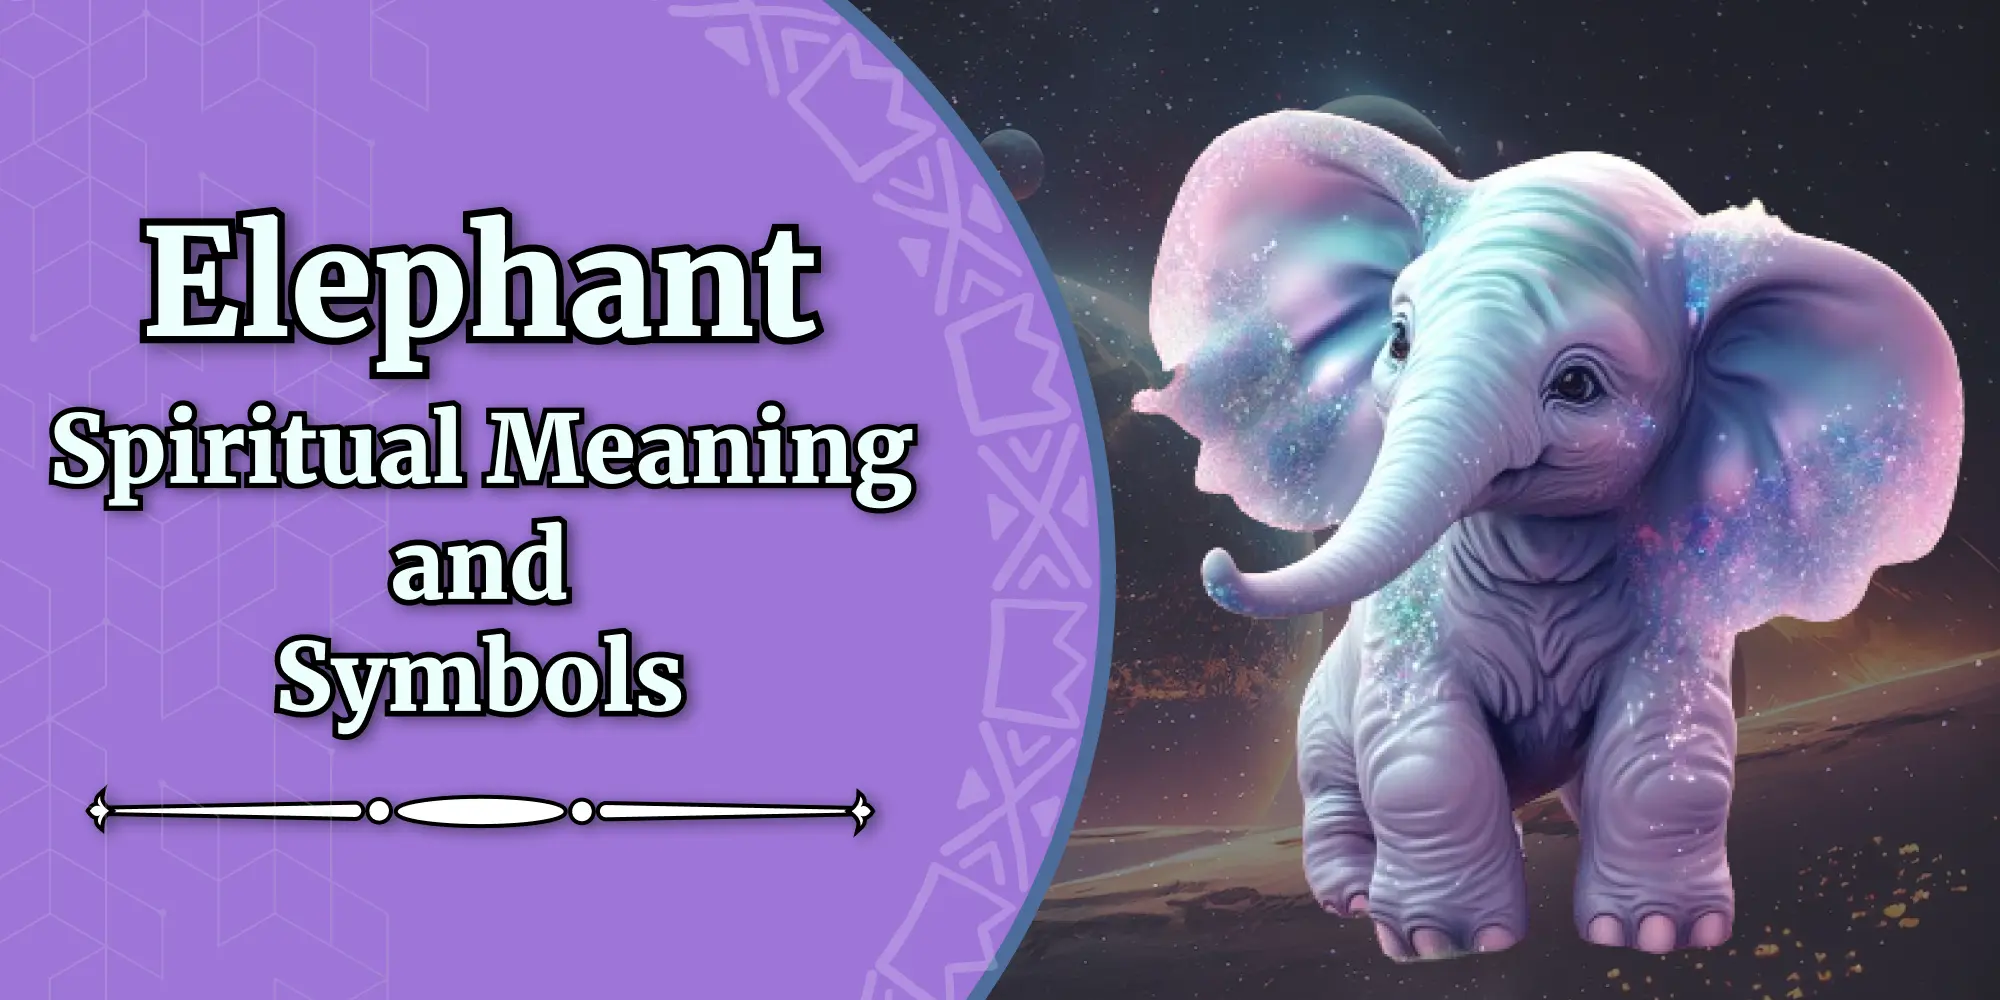 Elephant spiritual Meaning and Symbols